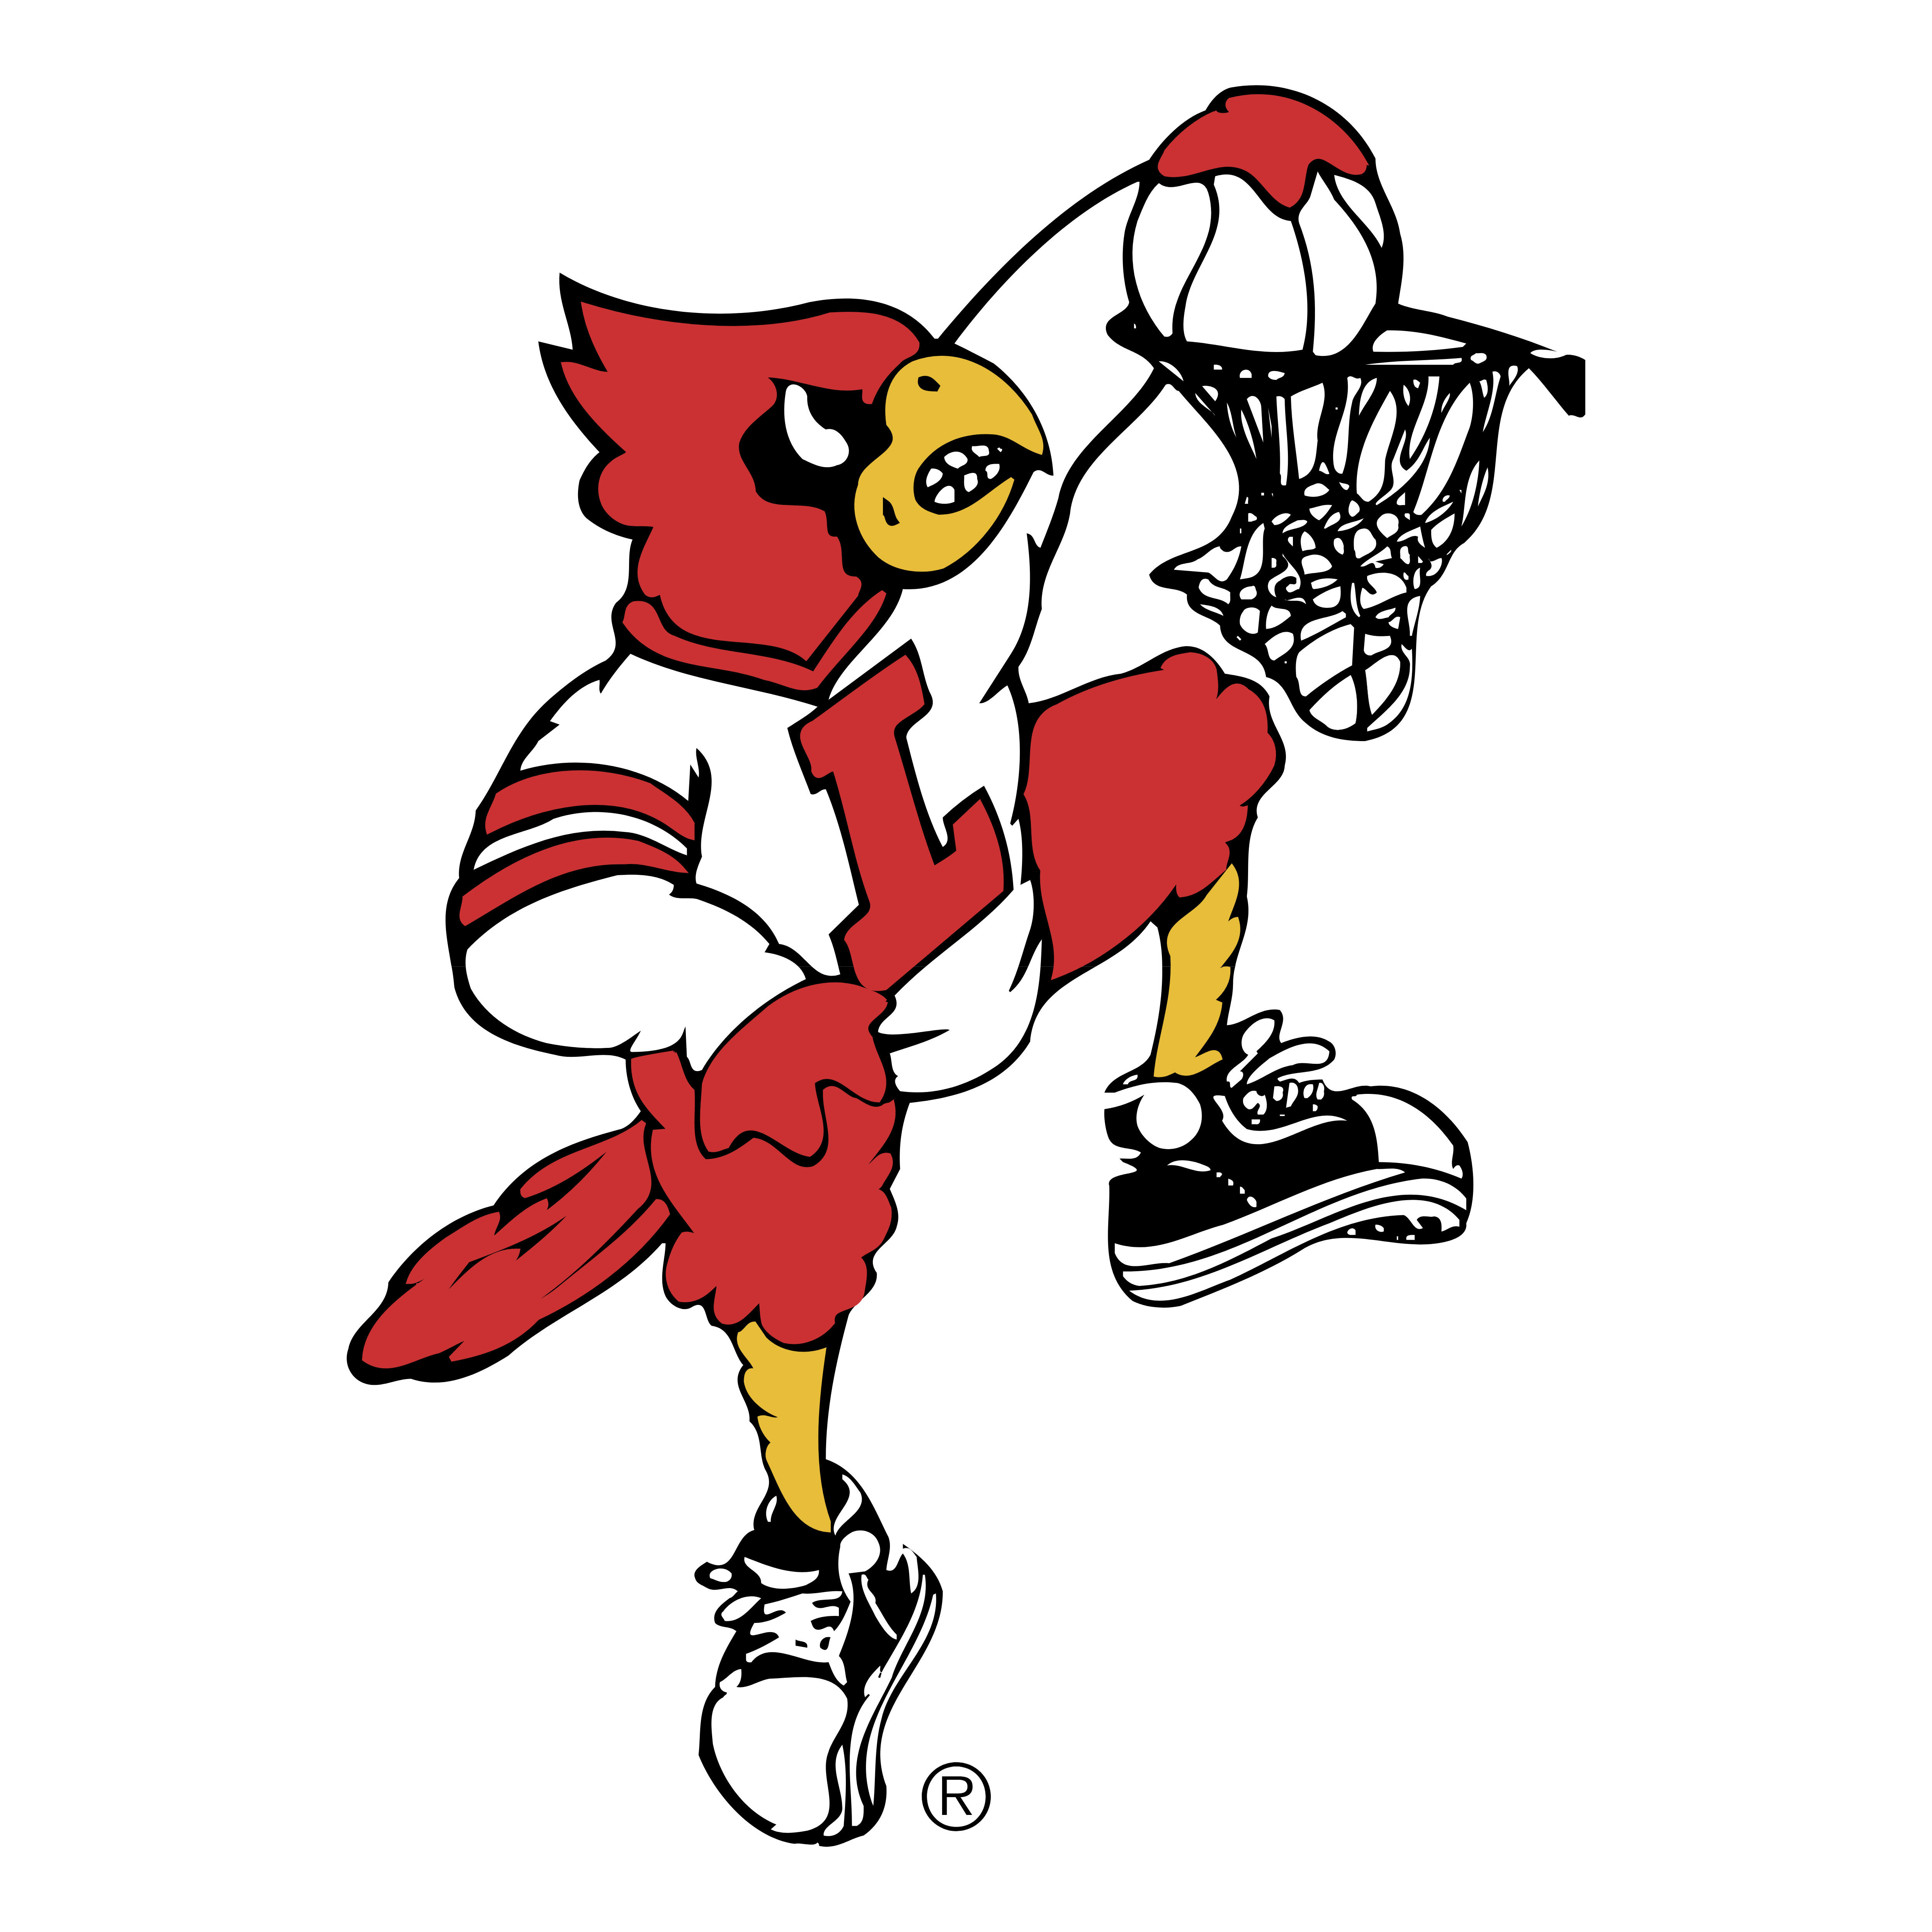 Louisville Cardinals – Logos Download